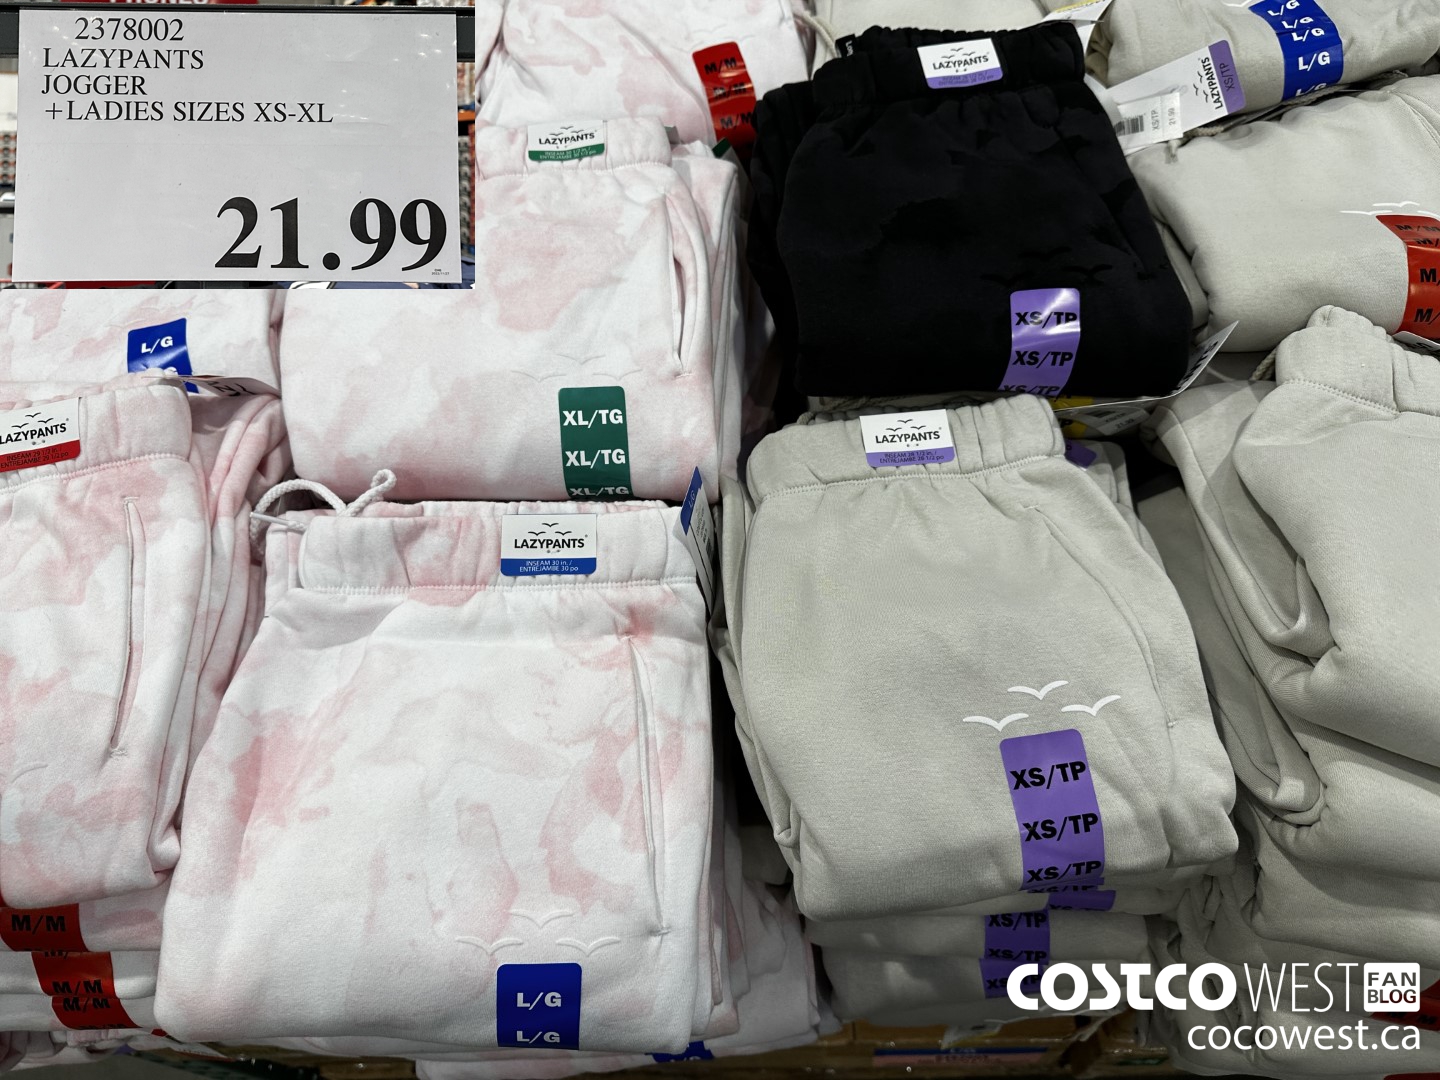 Costco.ca] Costco Lazy Pants Joggers (back in stock) $23.99